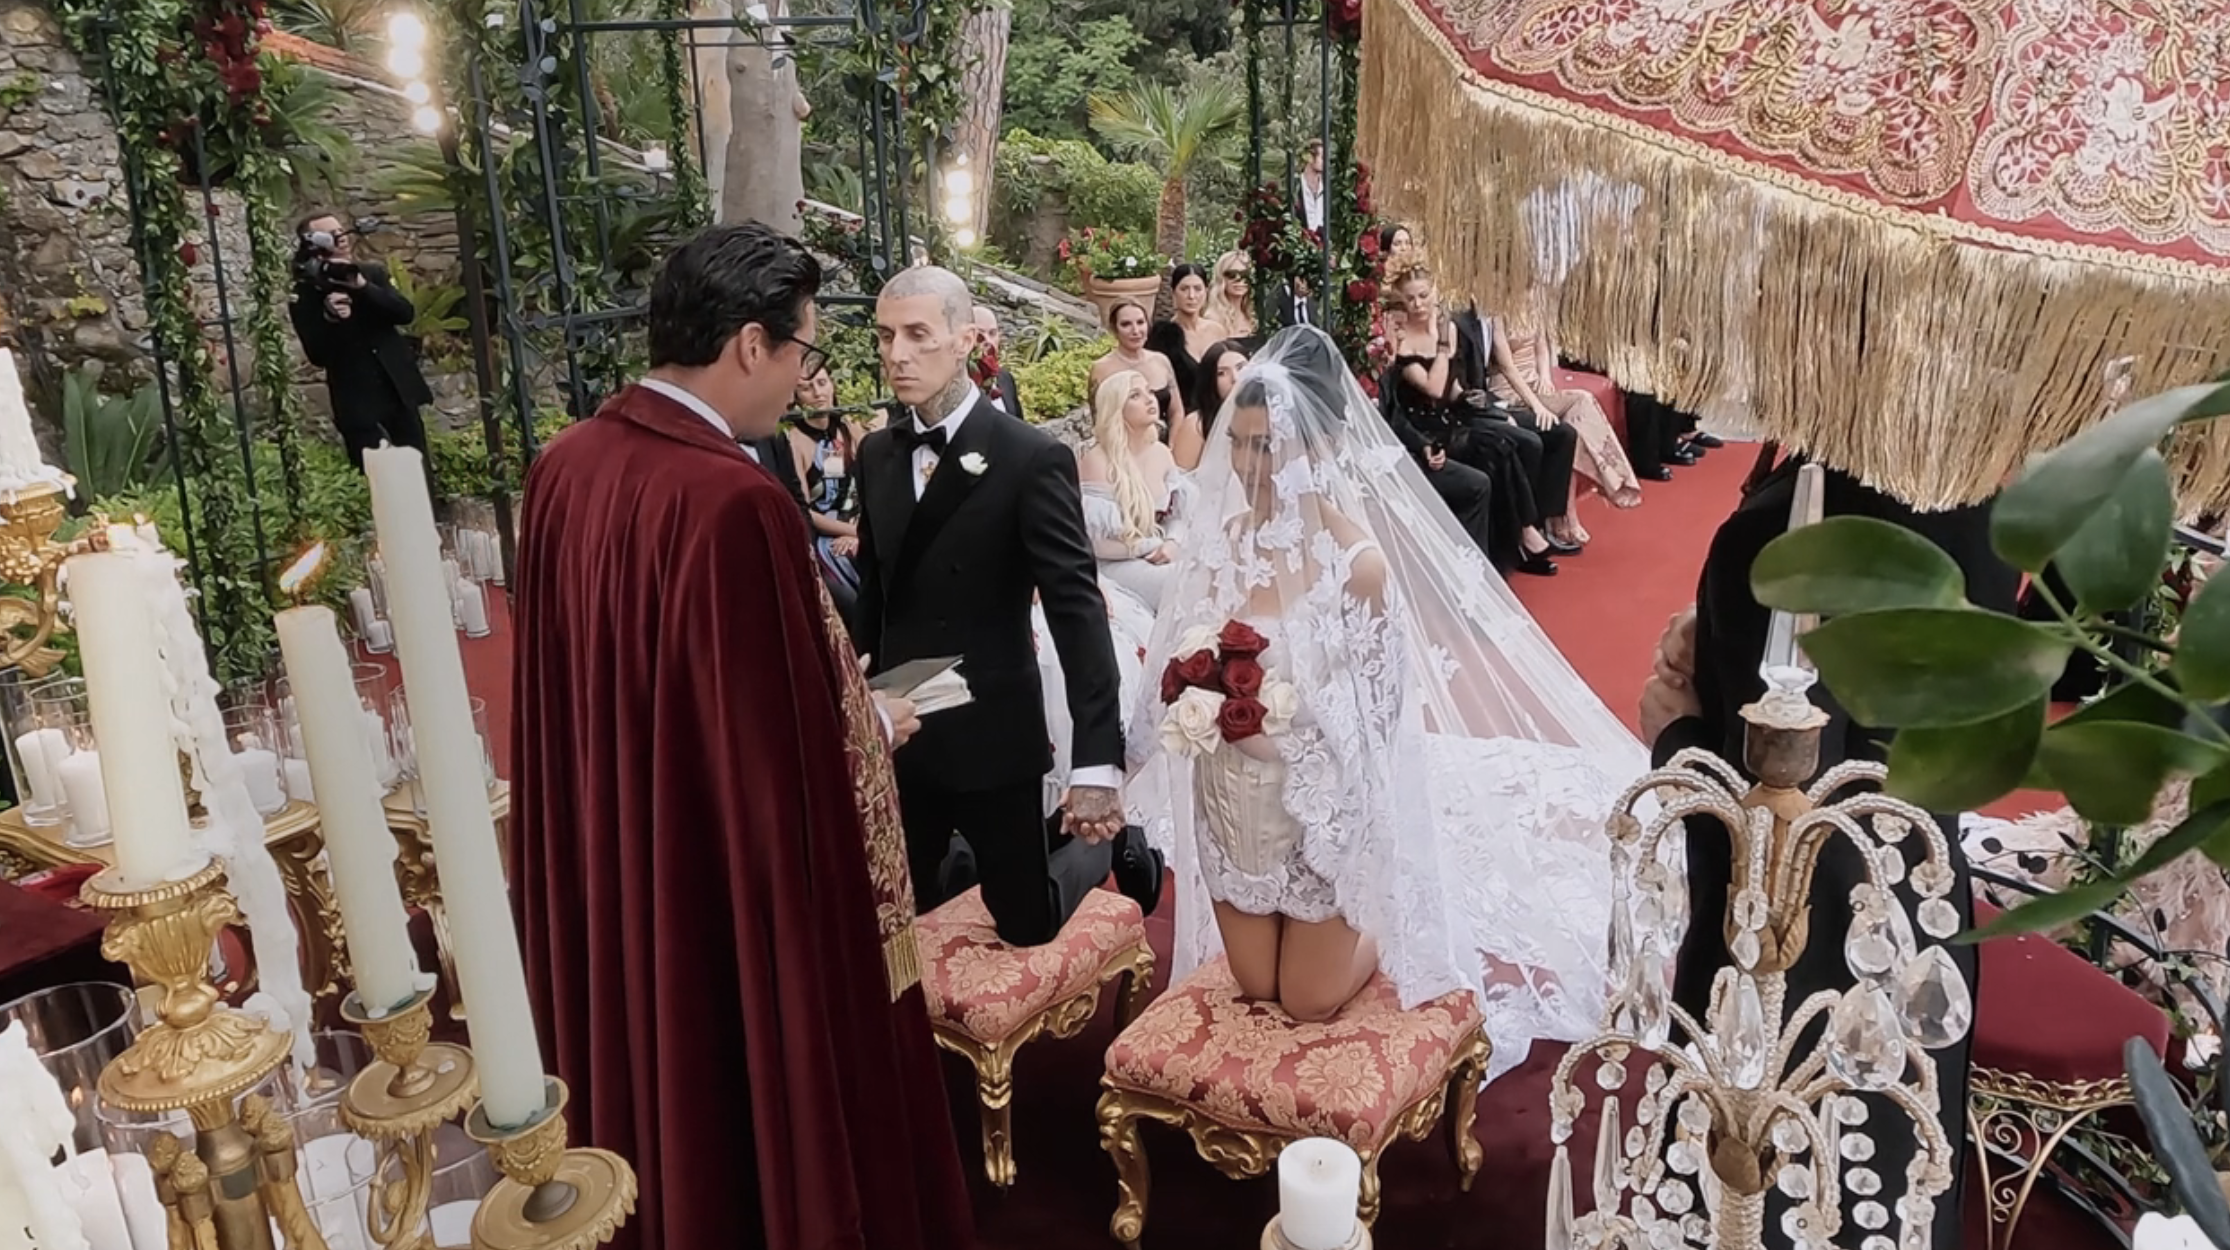 Travis Barker and Kourtney Kardashian getting married